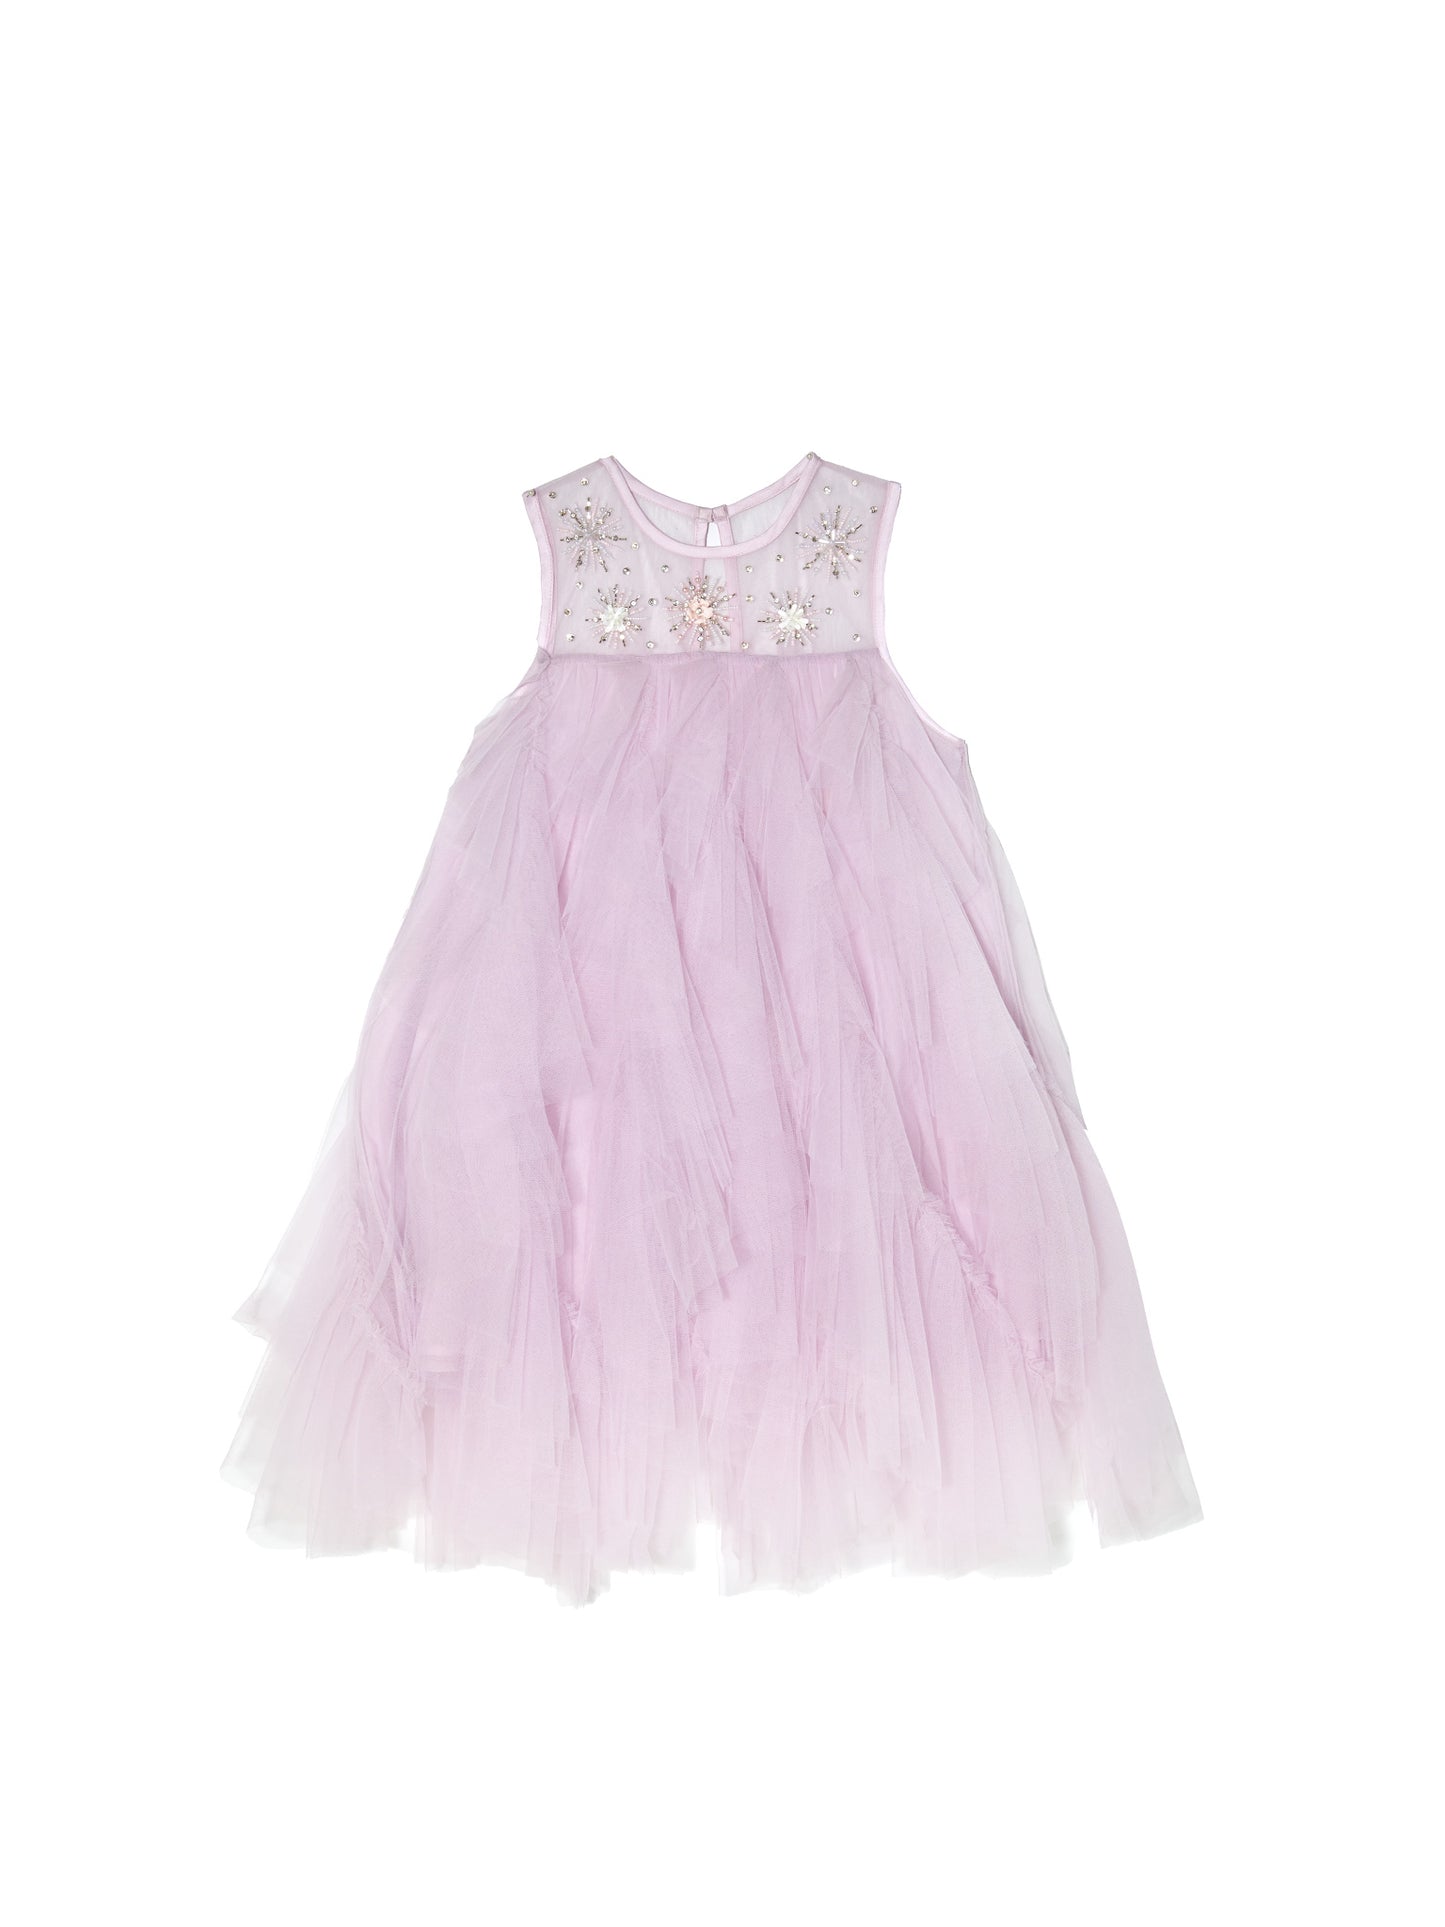 Tutu Du Monde Sleeveless Tulle Dress w/Stars _Lilac TDM7815-LLC